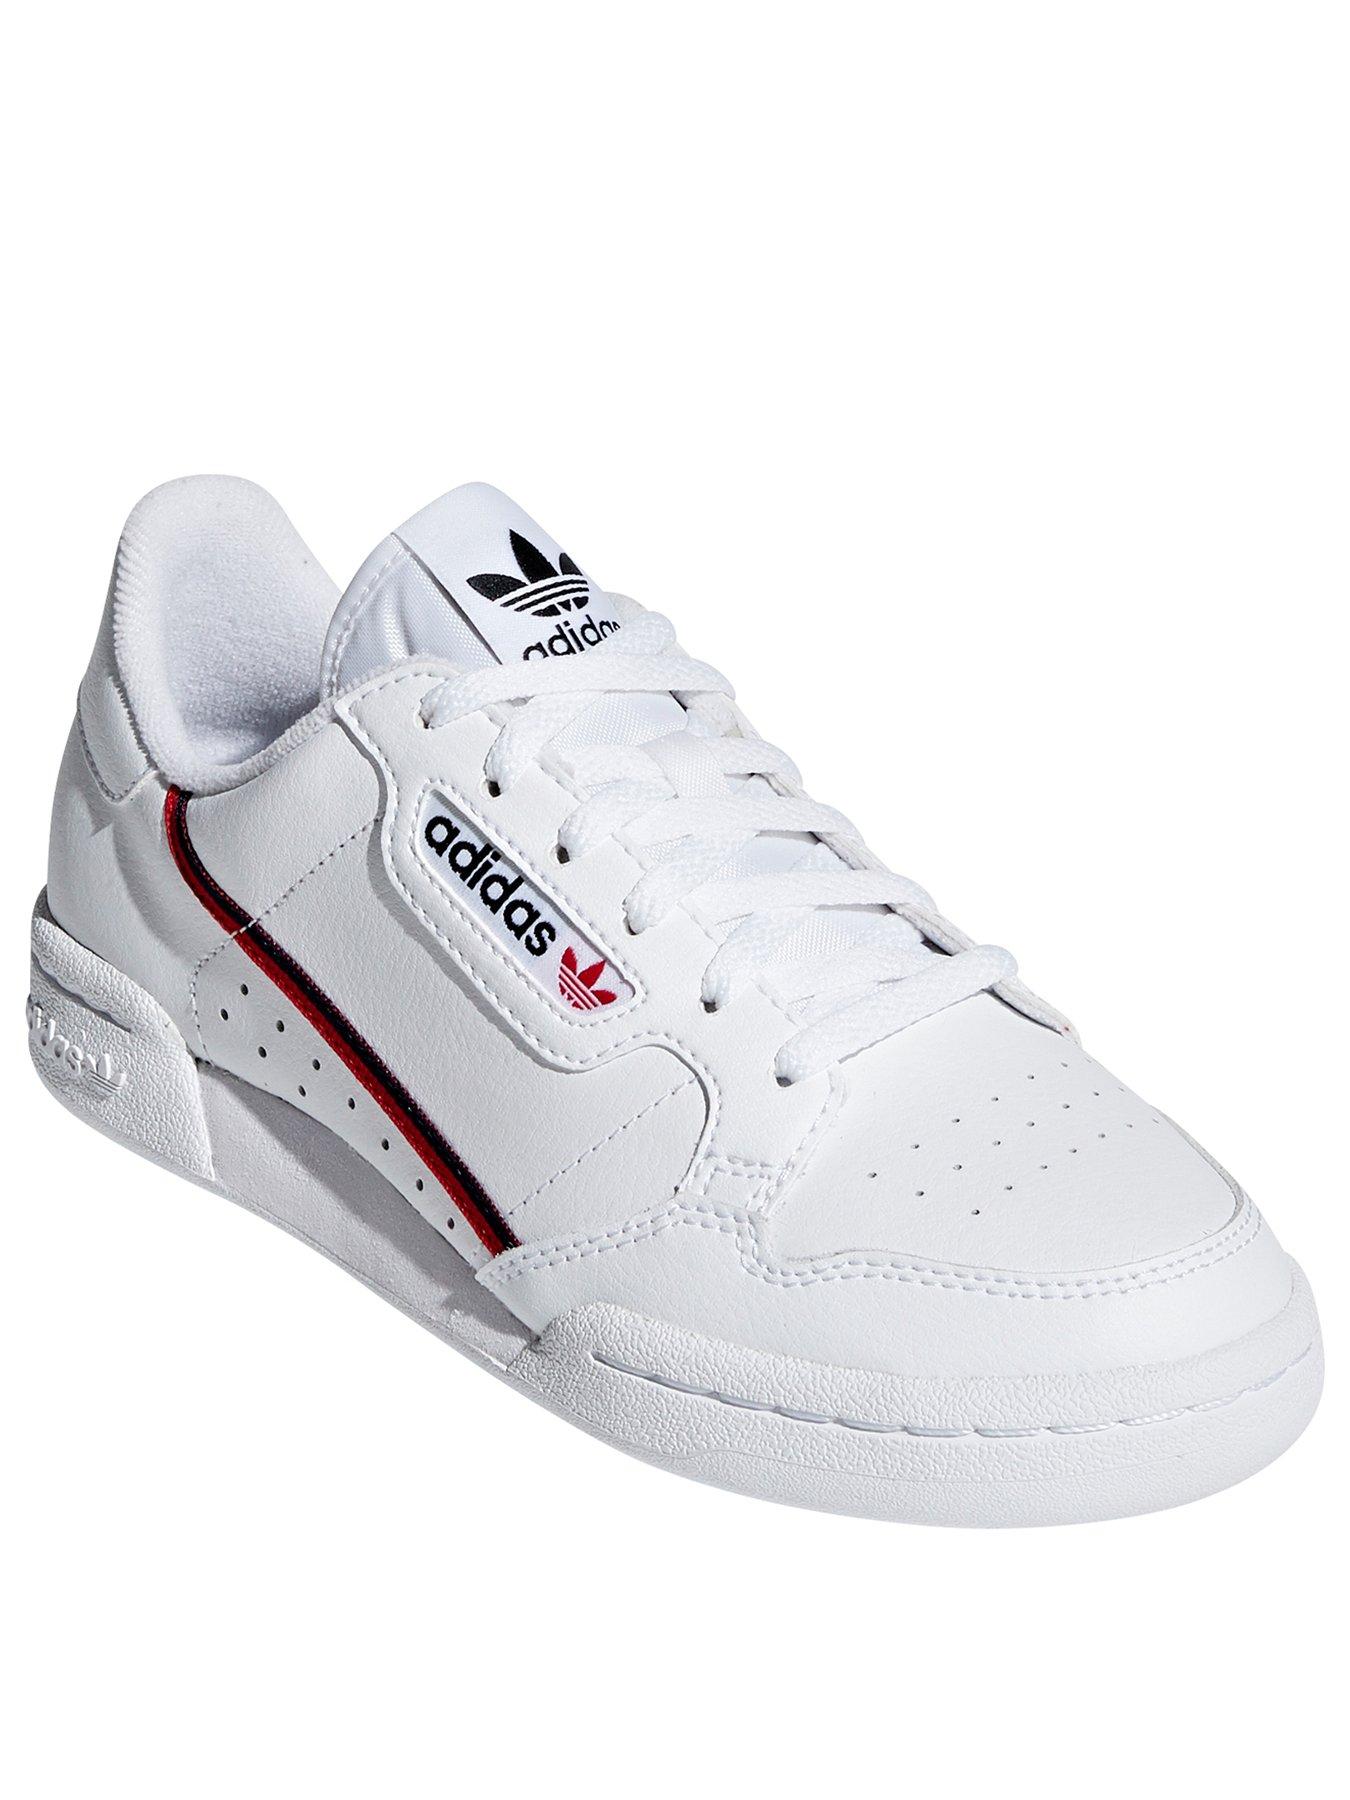 adidas white trainers